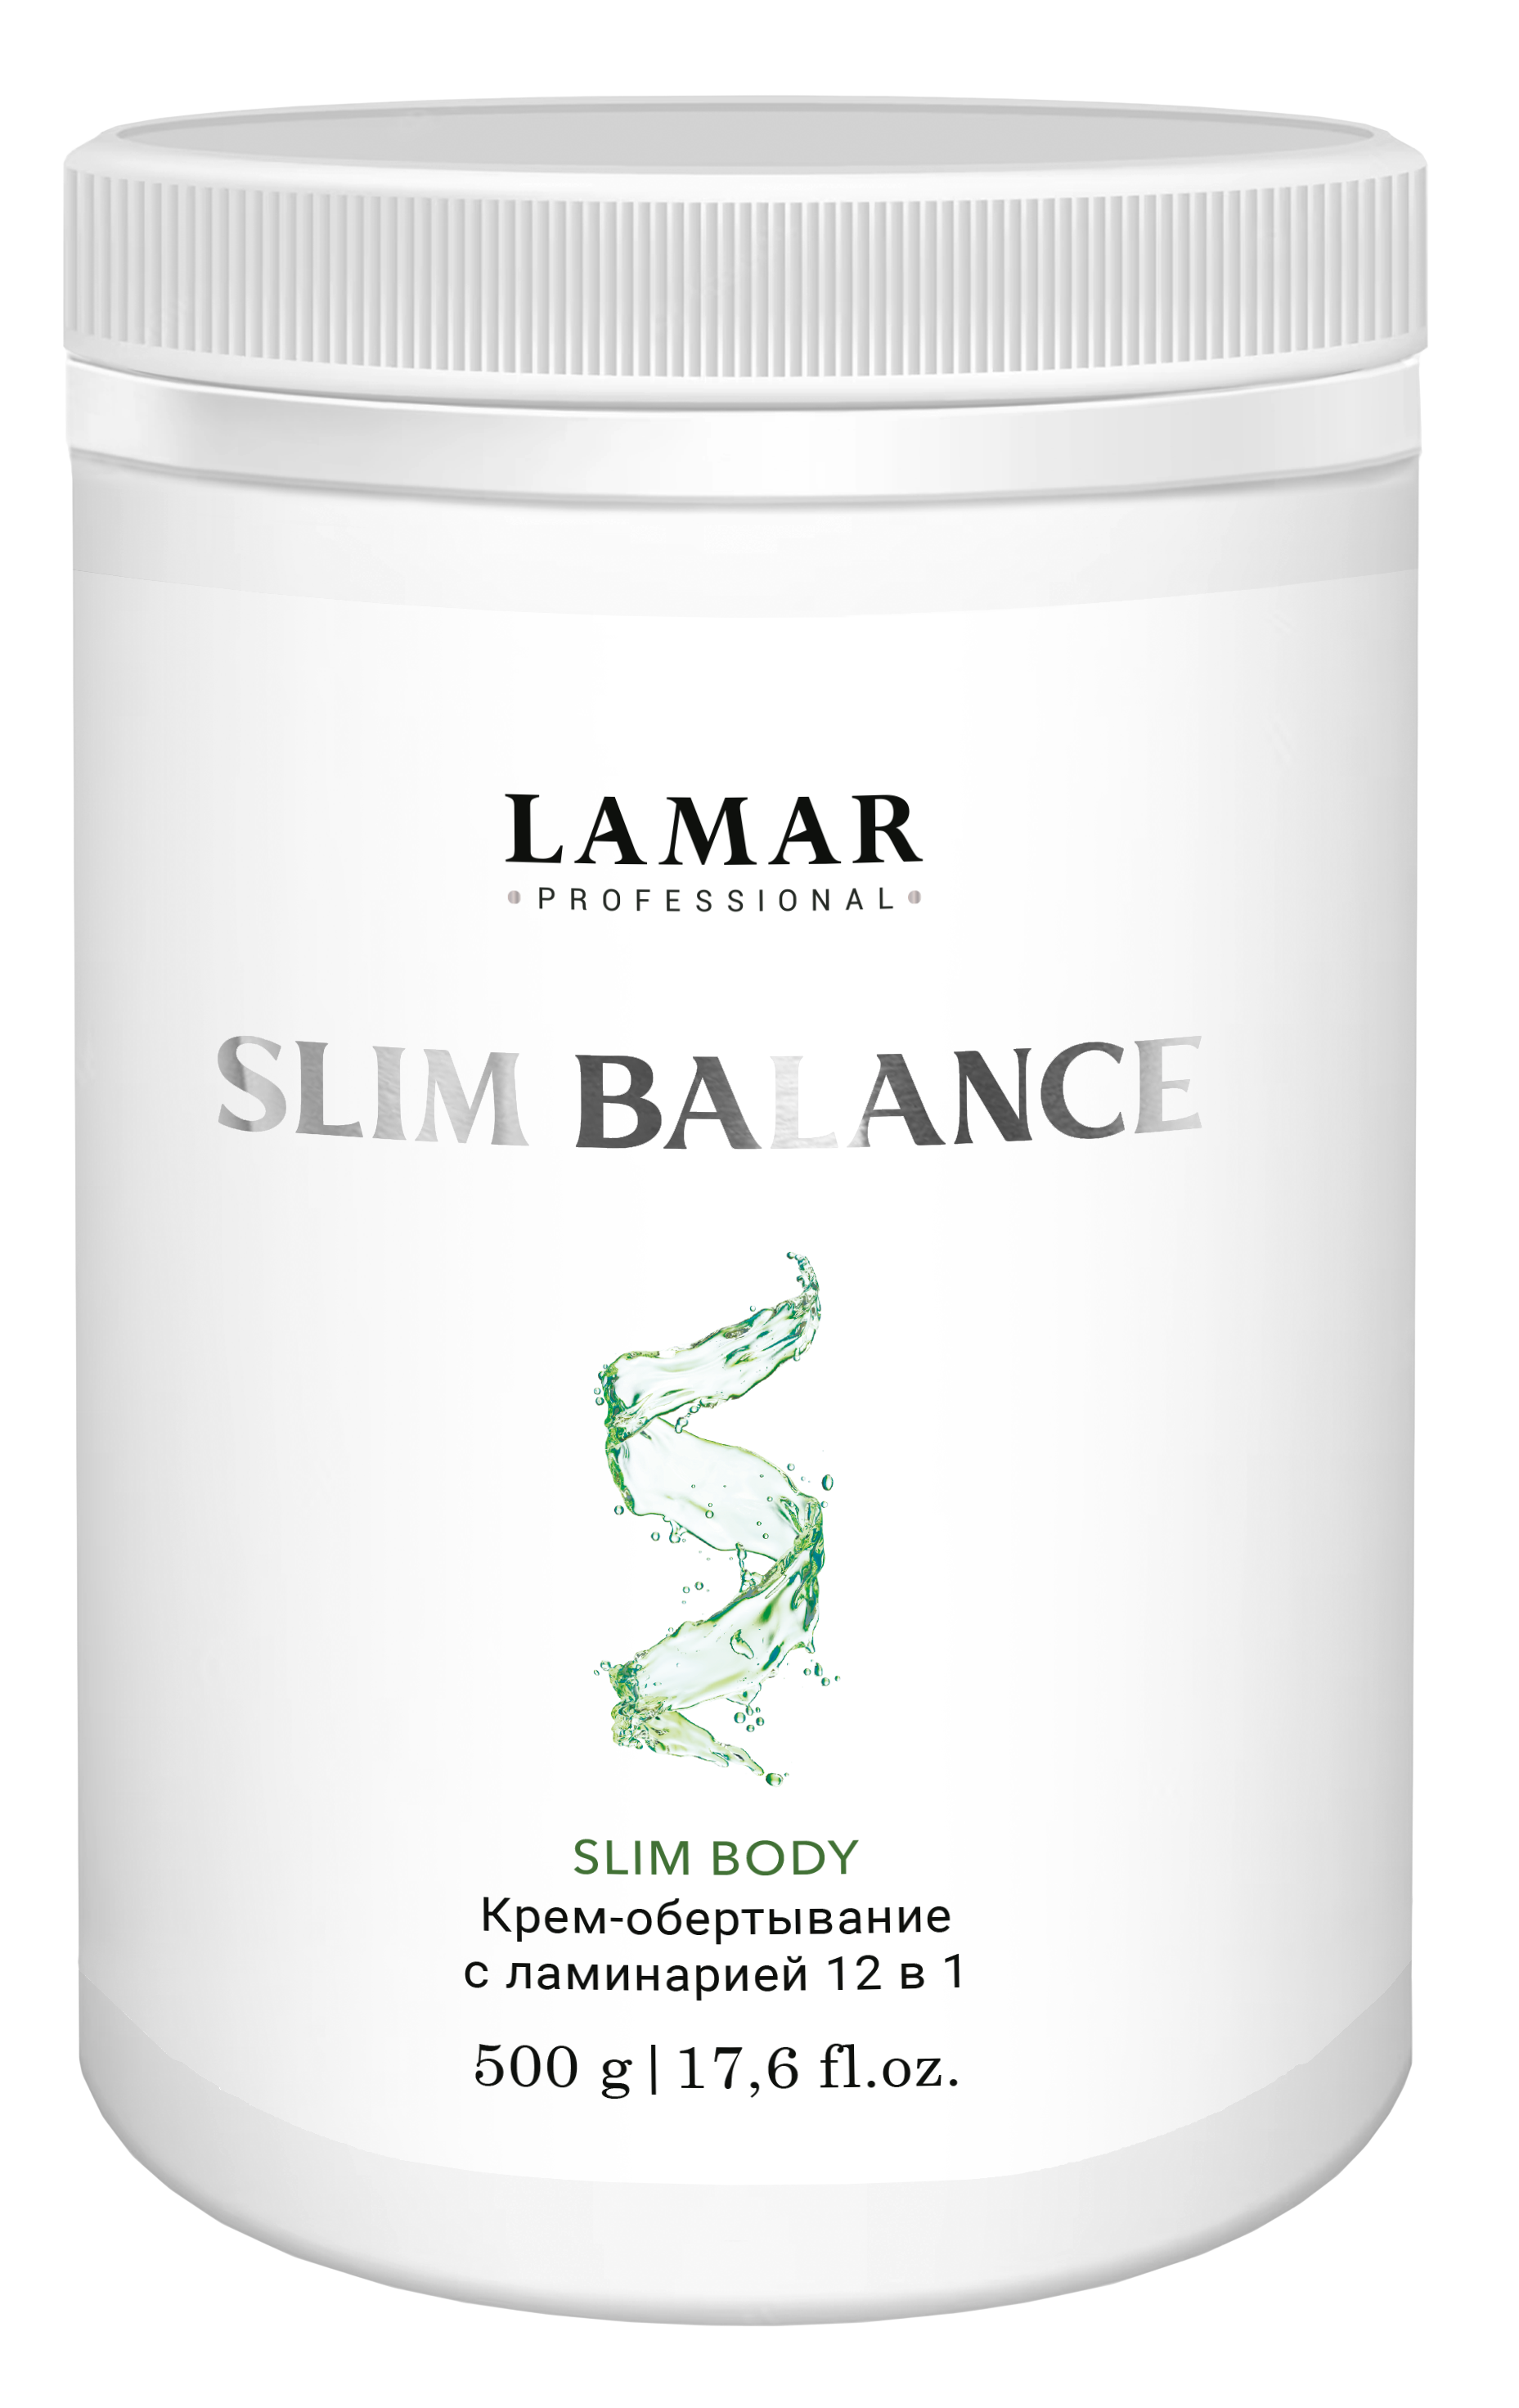 Крем-обертывание Lamar Professional Slim balance с ламинарией 12 в 1 500 г